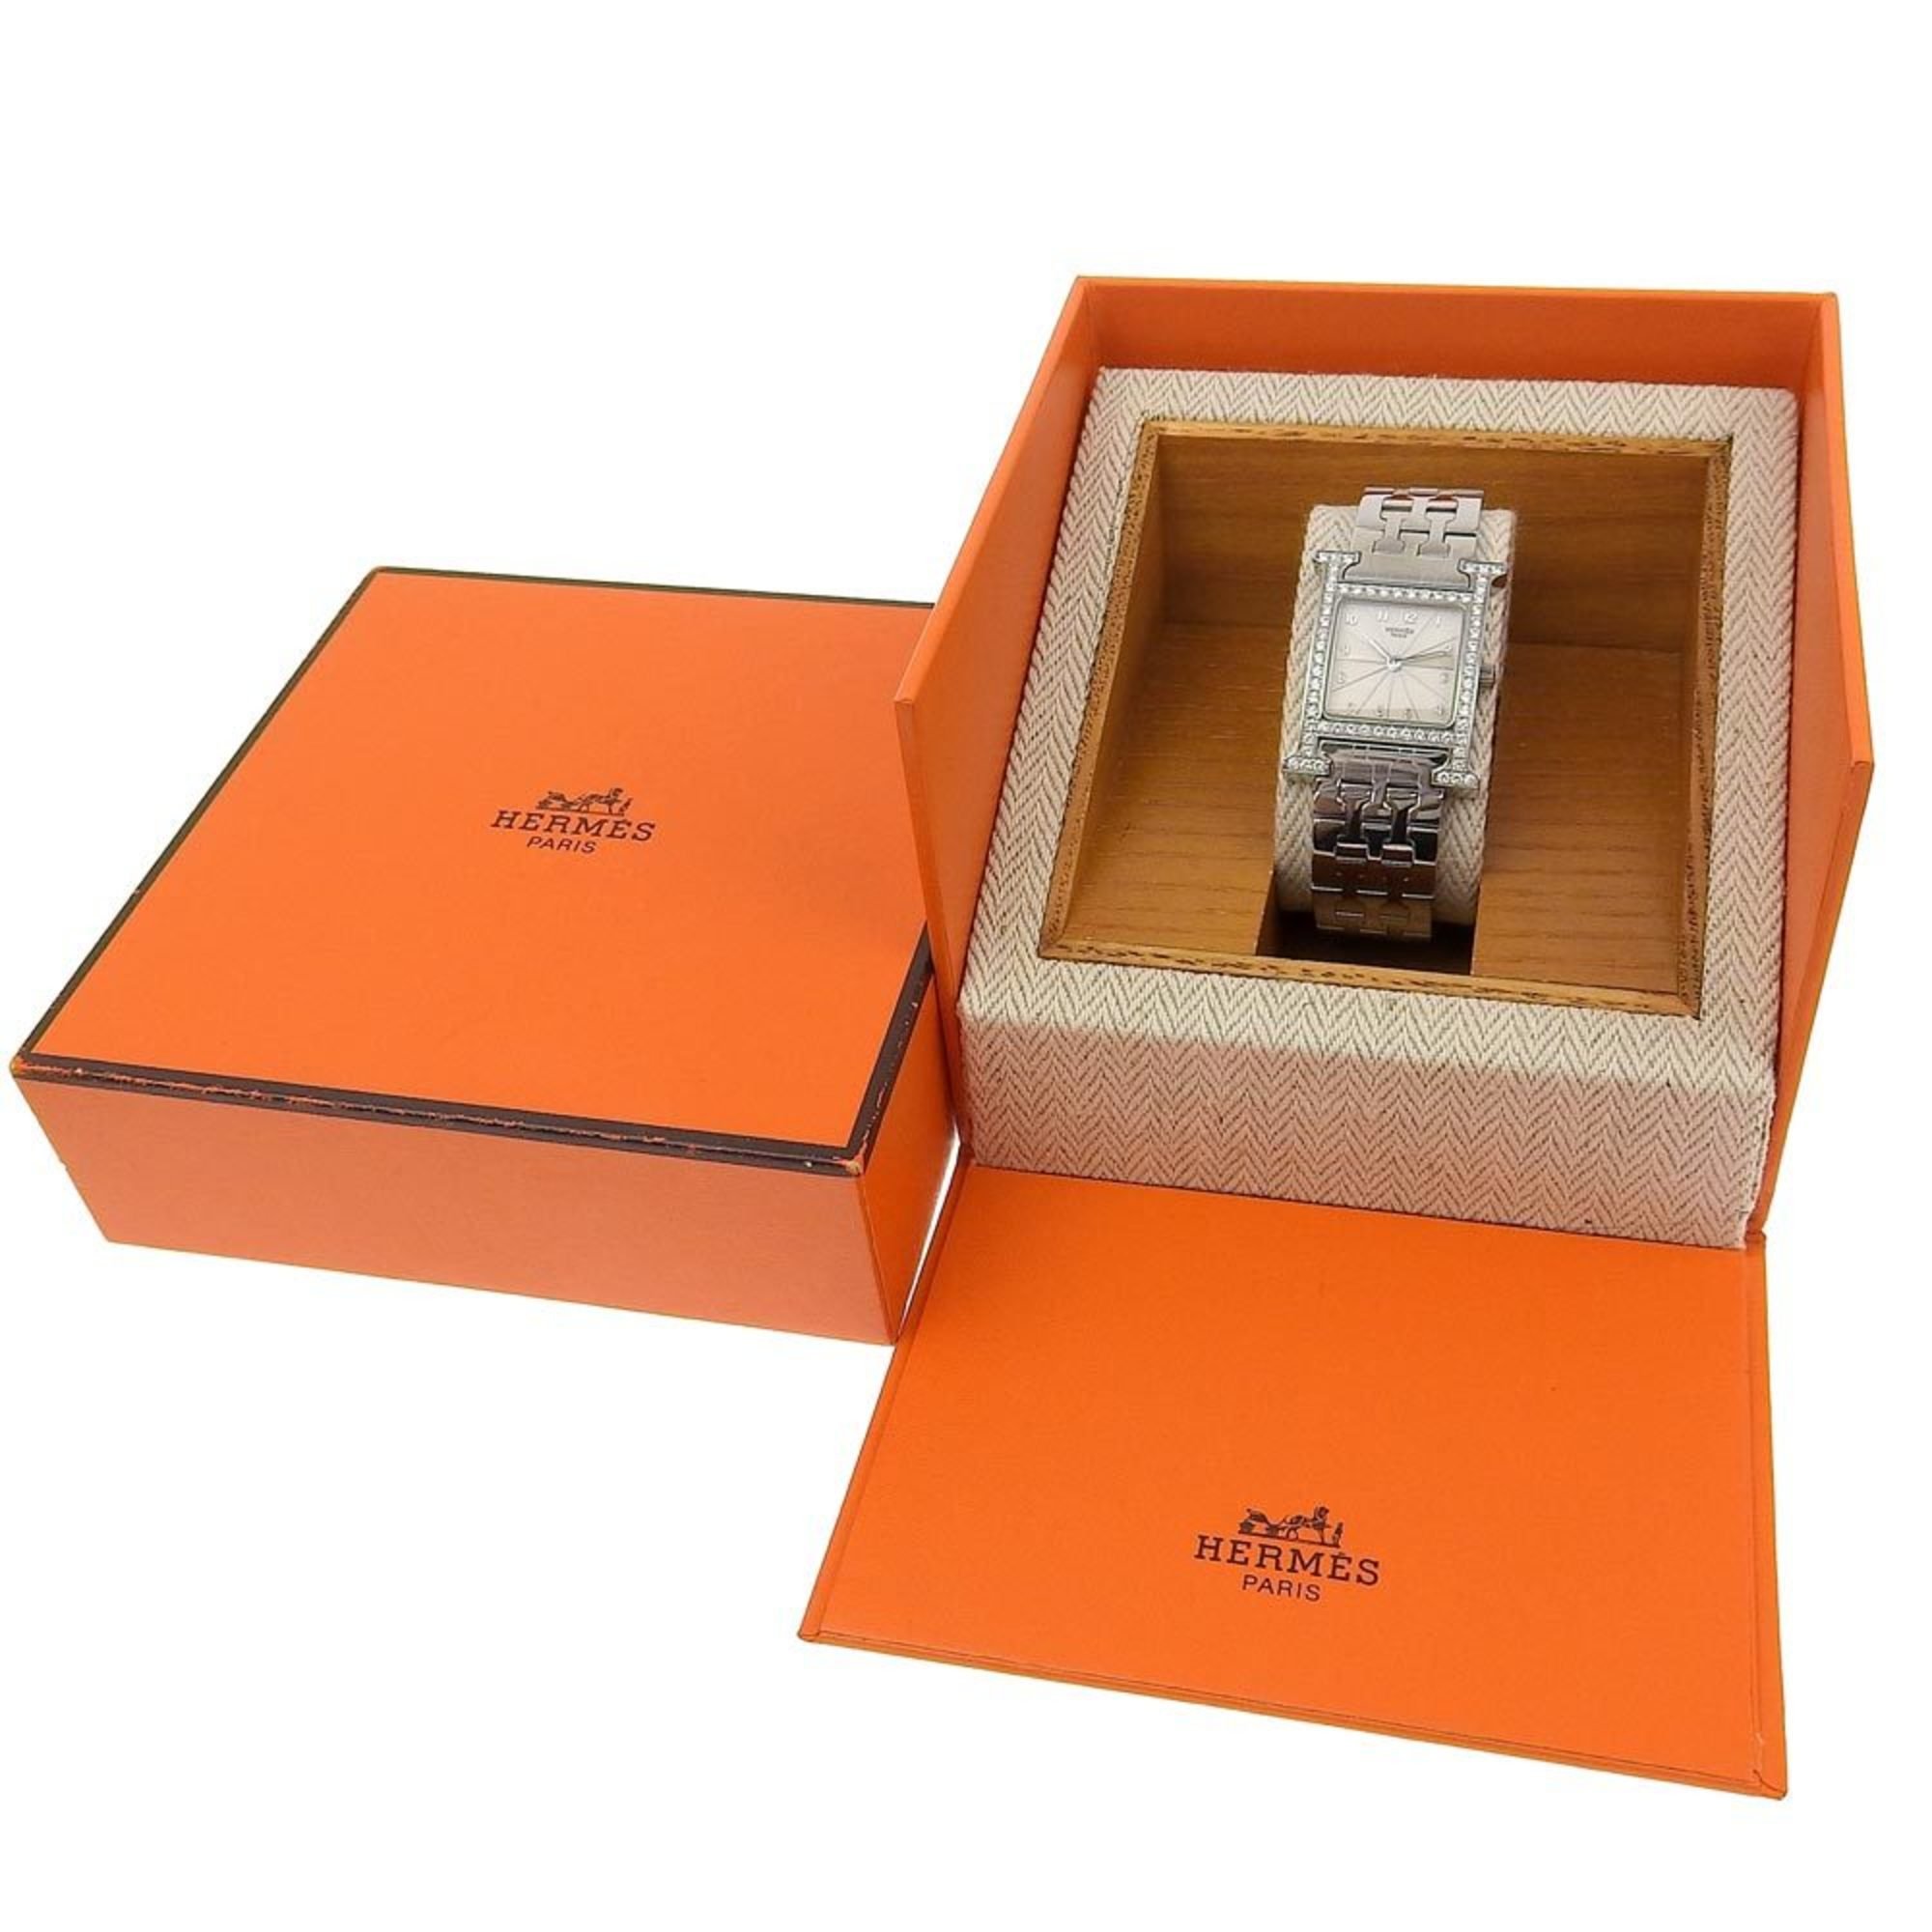 Hermes HERMES H Watch Wristwatch Diamond Bezel HH1.230 Stainless Steel Quartz Analog Display Silver Dial Women's